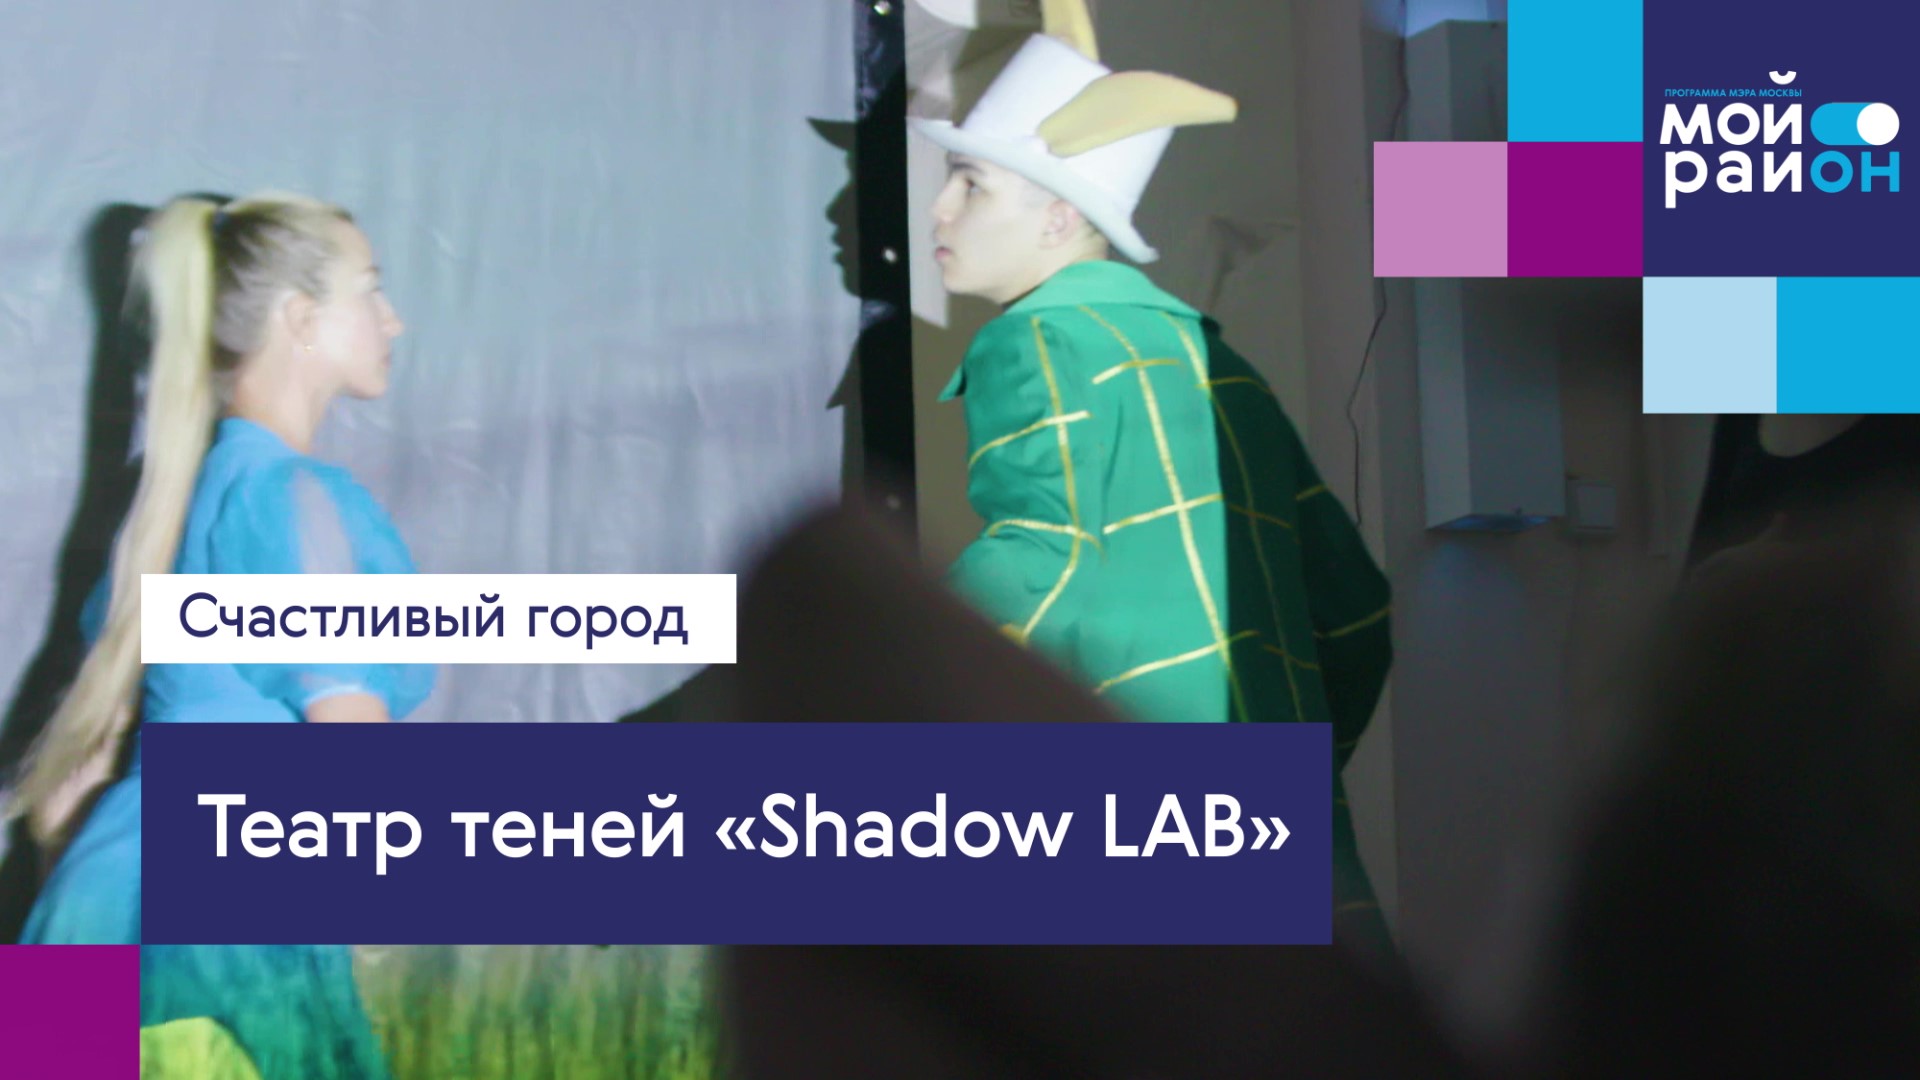 Проекты, которые меняют жизнь: Театр теней Shadow LAB